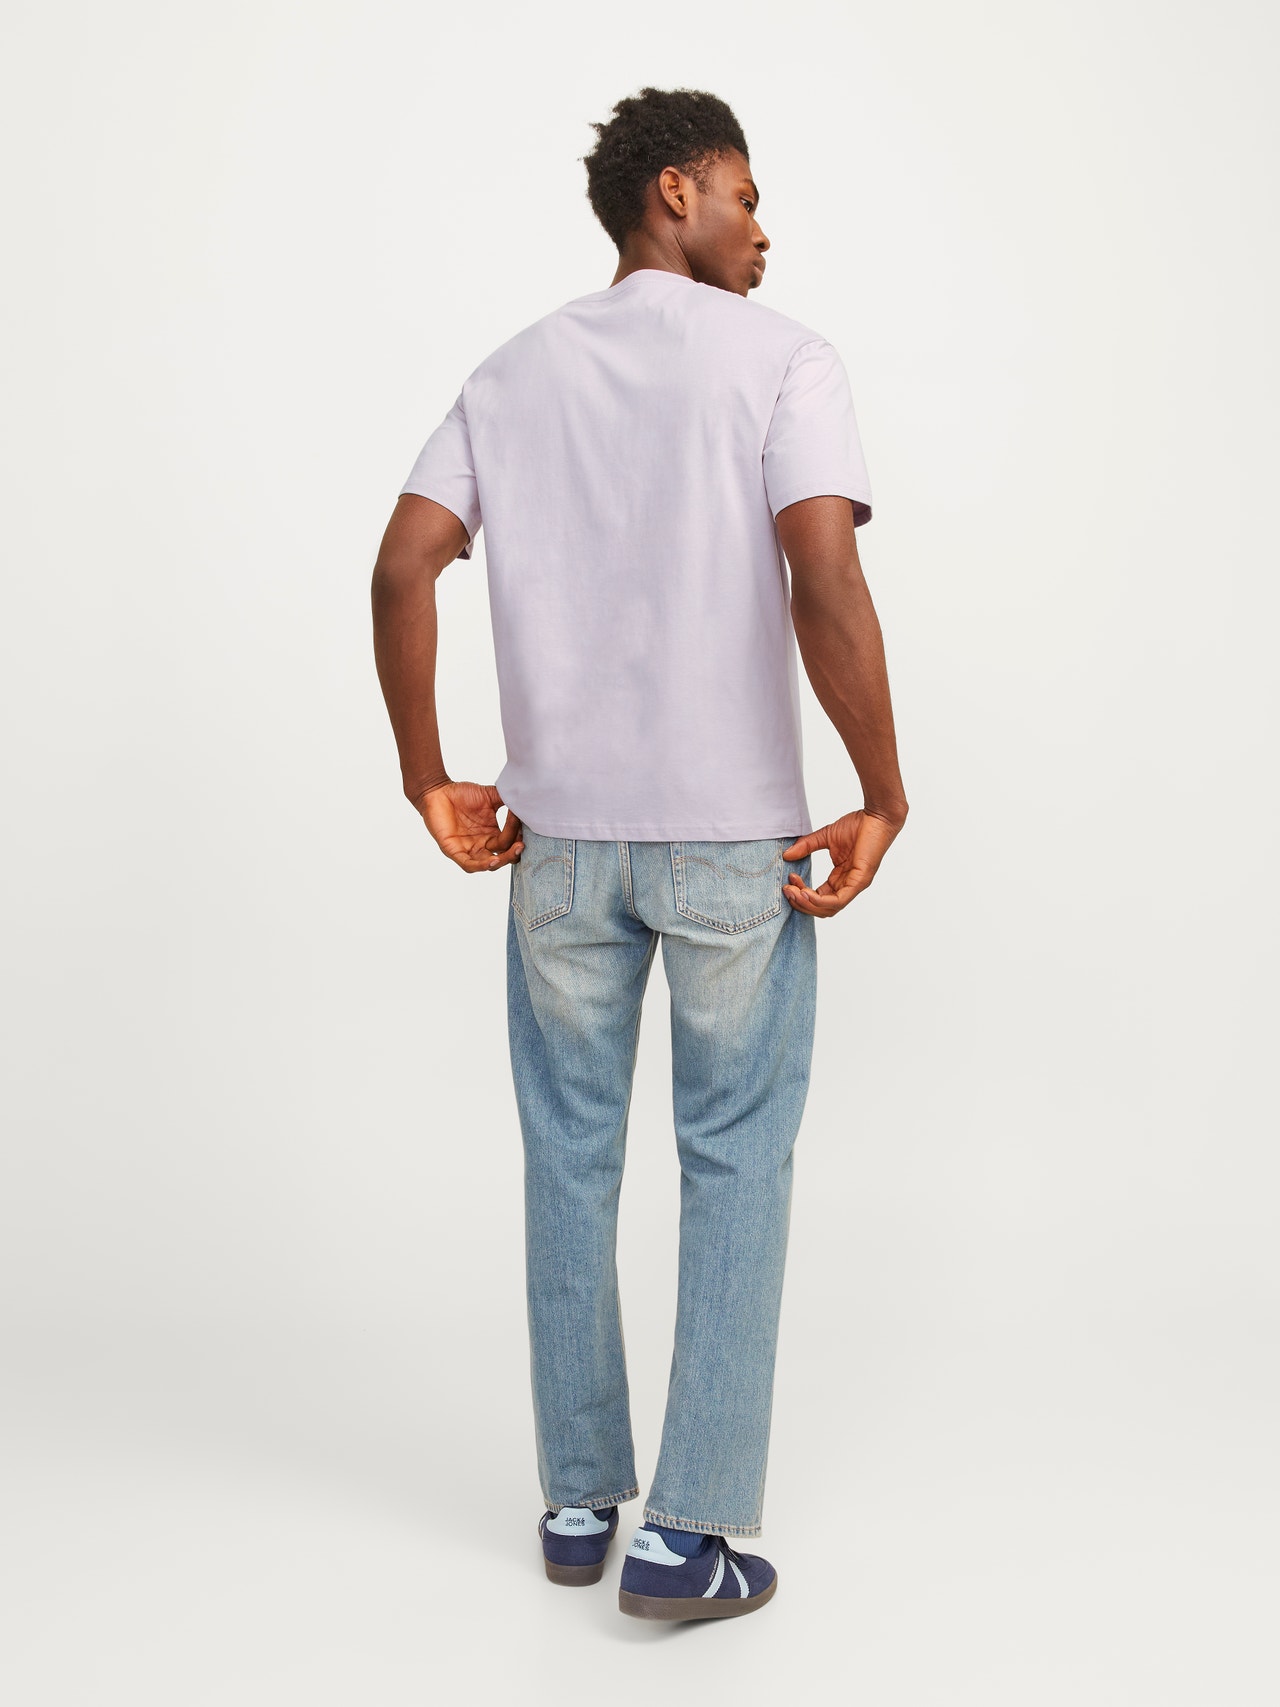 Jack & Jones T-shirt Estampar Decote Redondo -Lavender Frost - 12240121